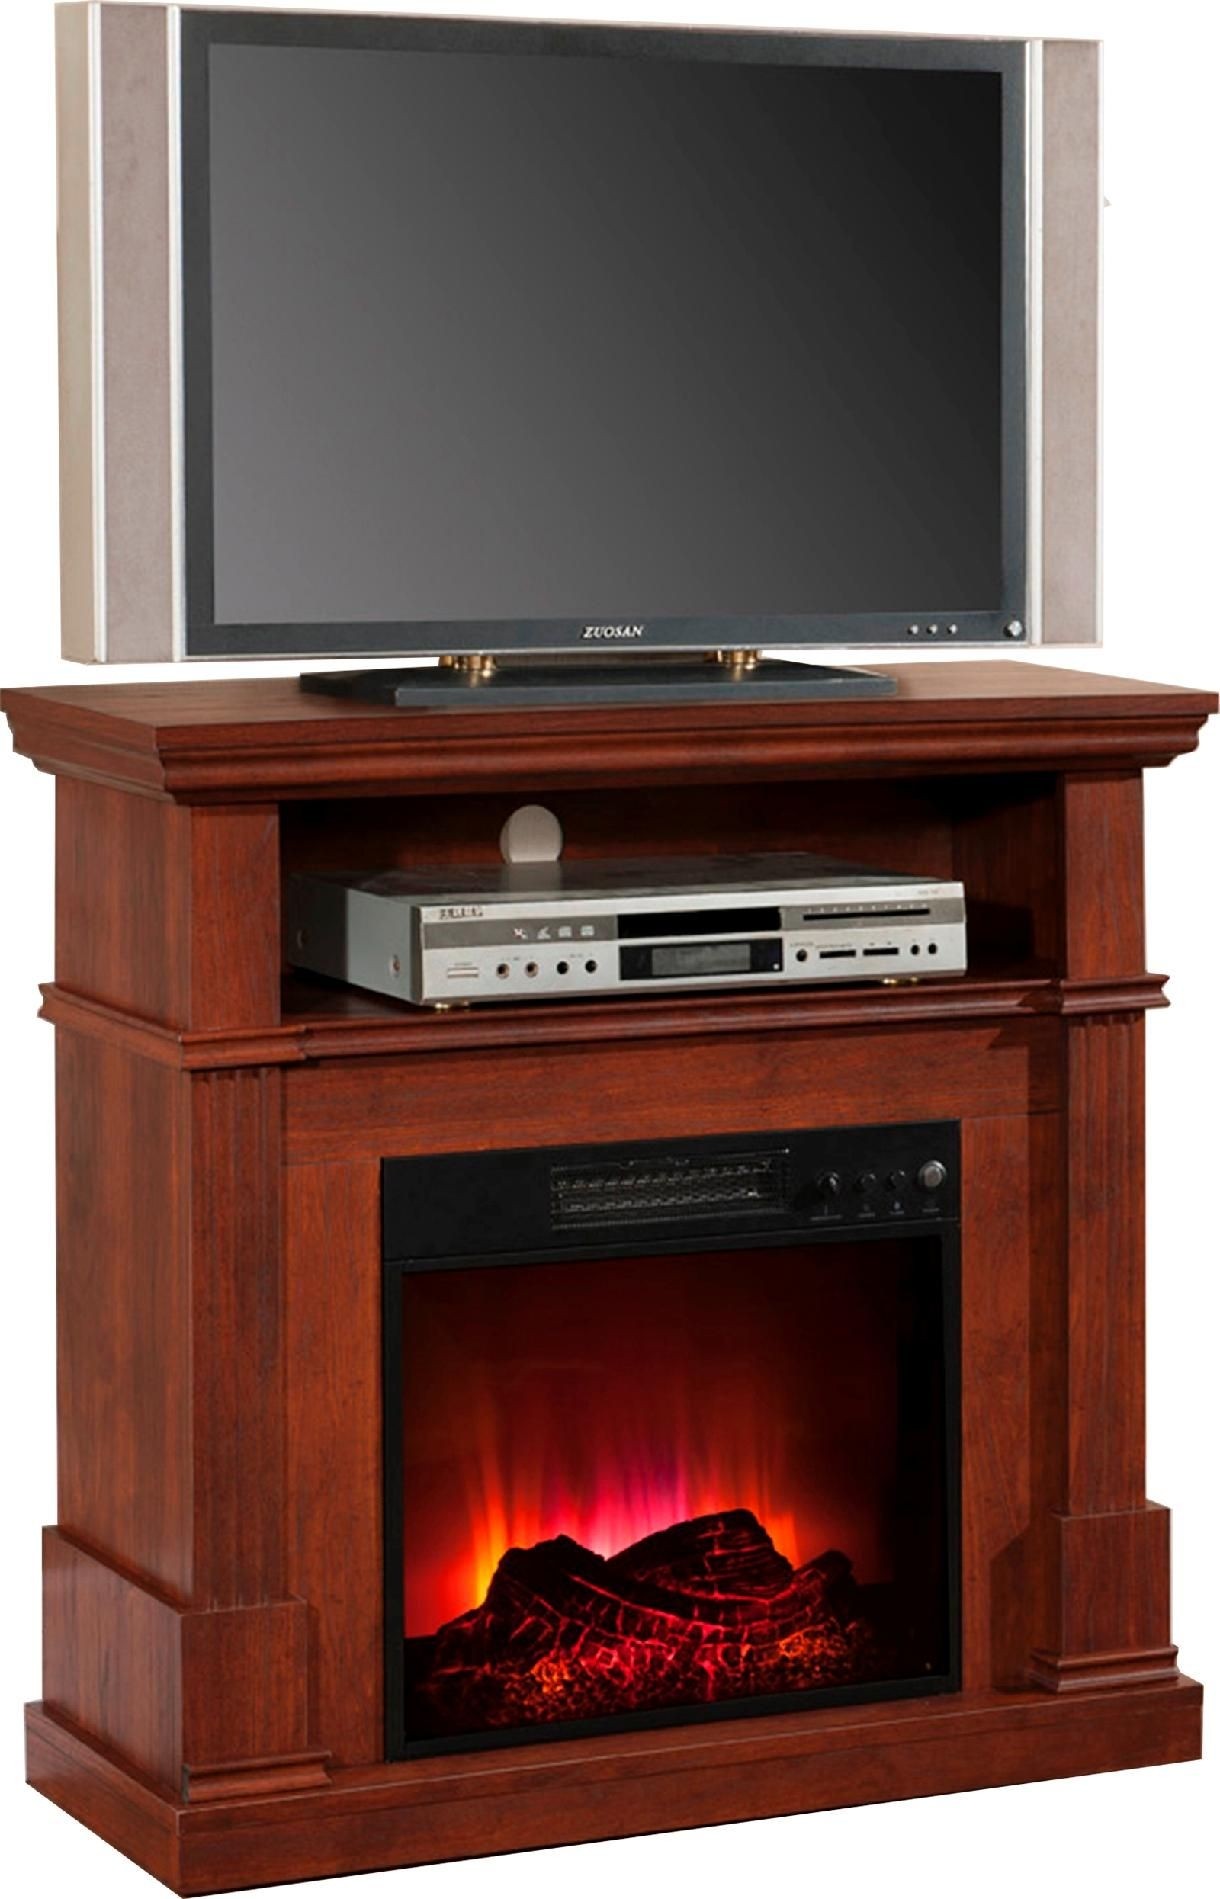 Electric entertainment center fireplace warm